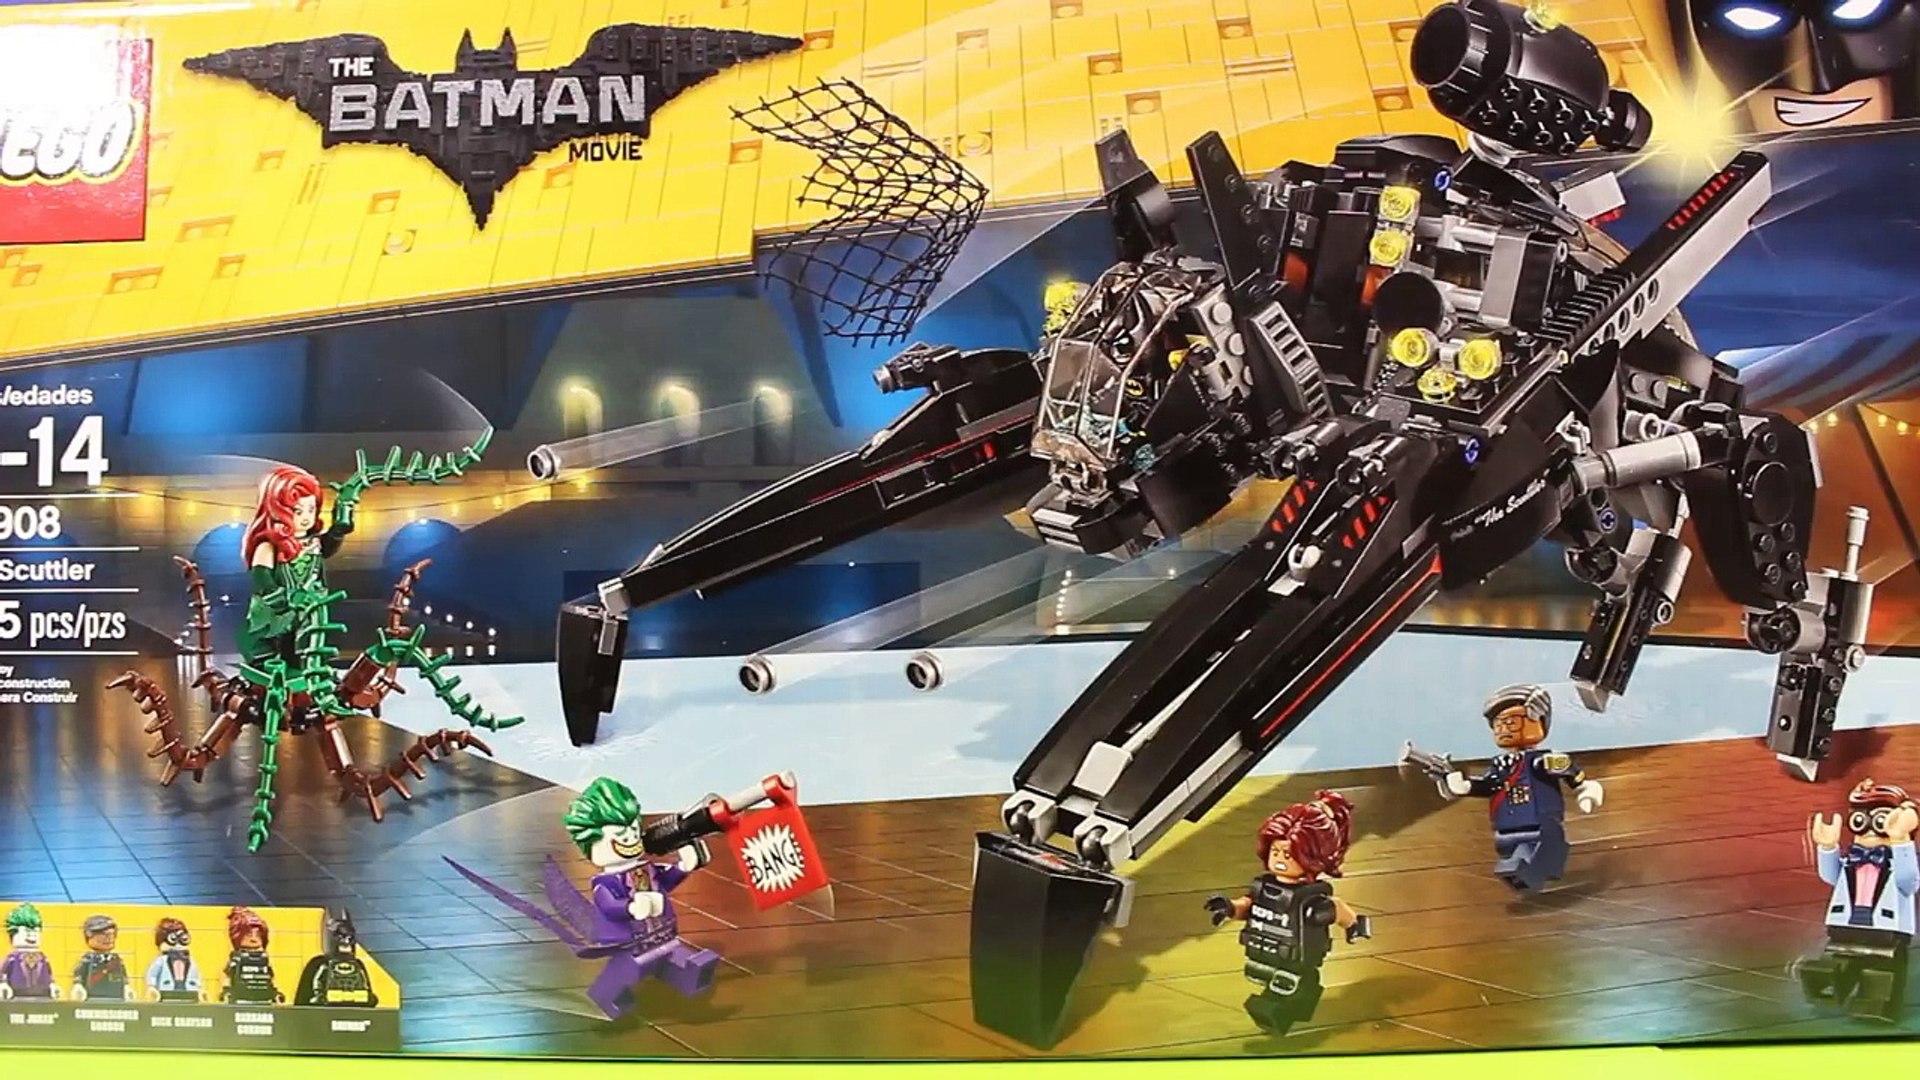 The Lego Batman Movie' Batmobile and Scuttler sets ooze eccentricity -  Video - CNET